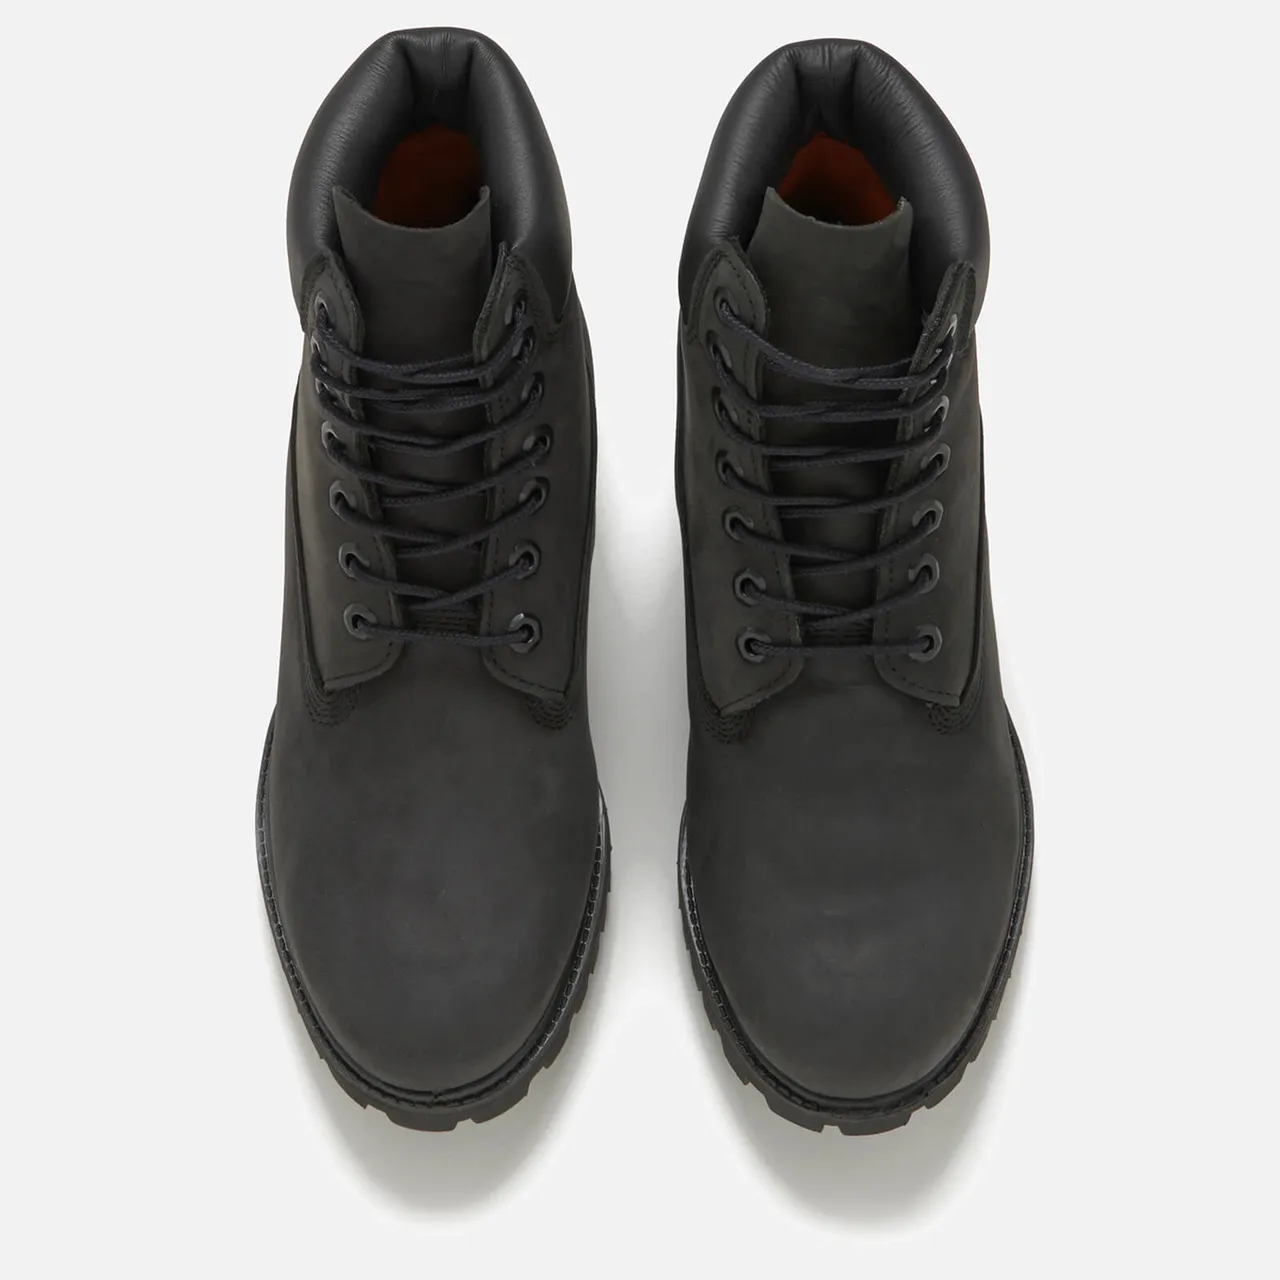 Timberland Men's 6 Inch Premium Waterproof Boots - Black - UK